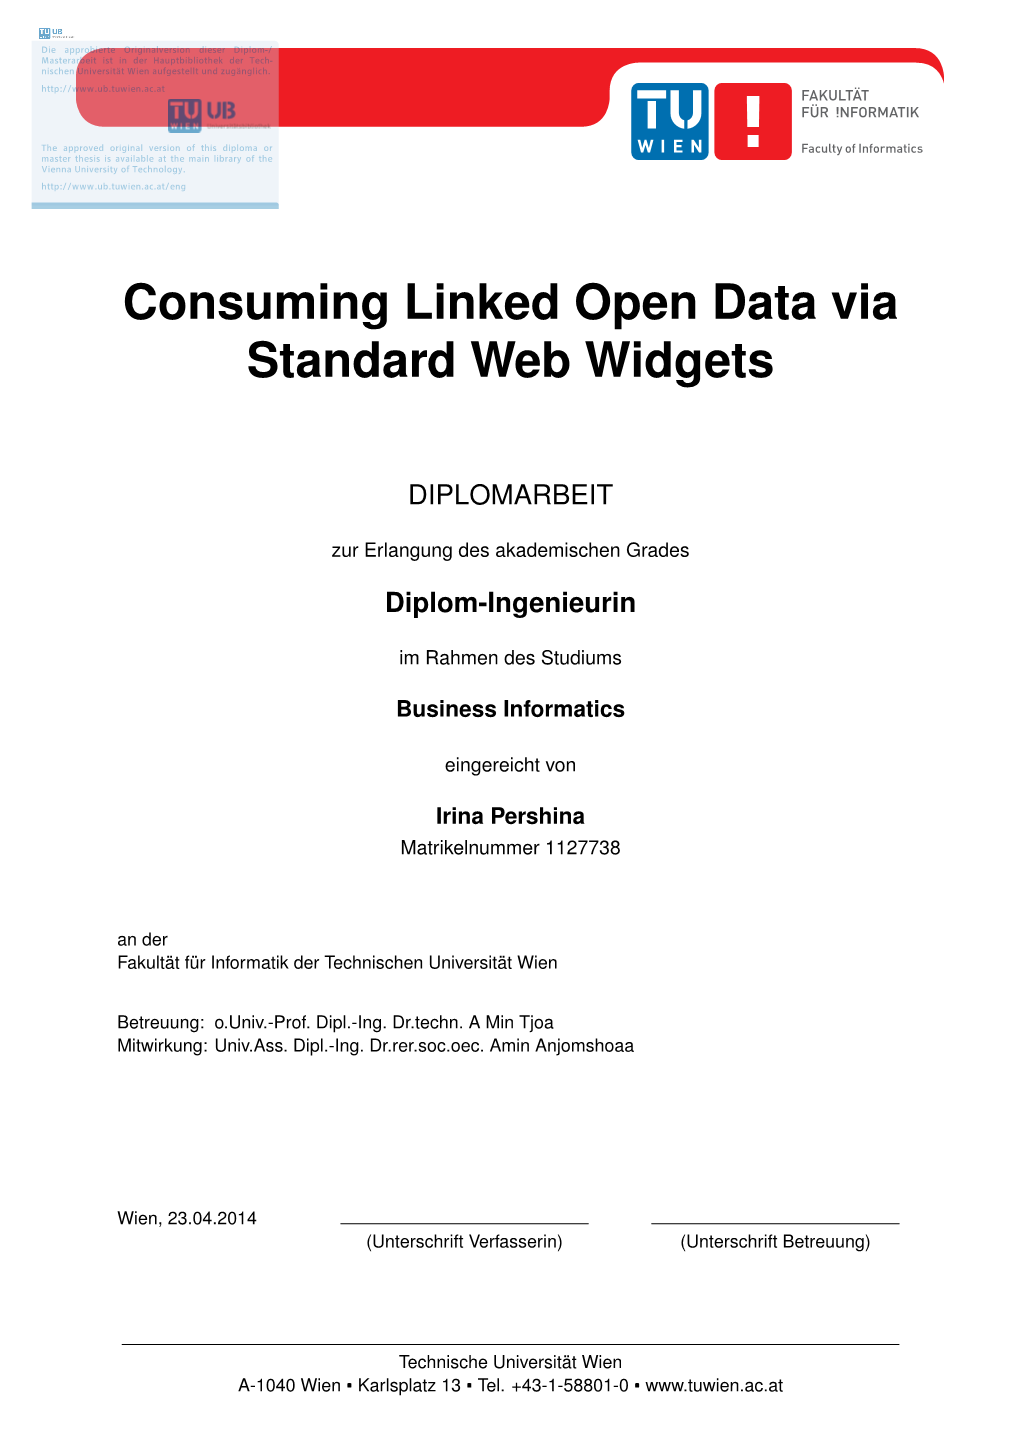 Consuming Linked Open Data Via Standard Web Widgets